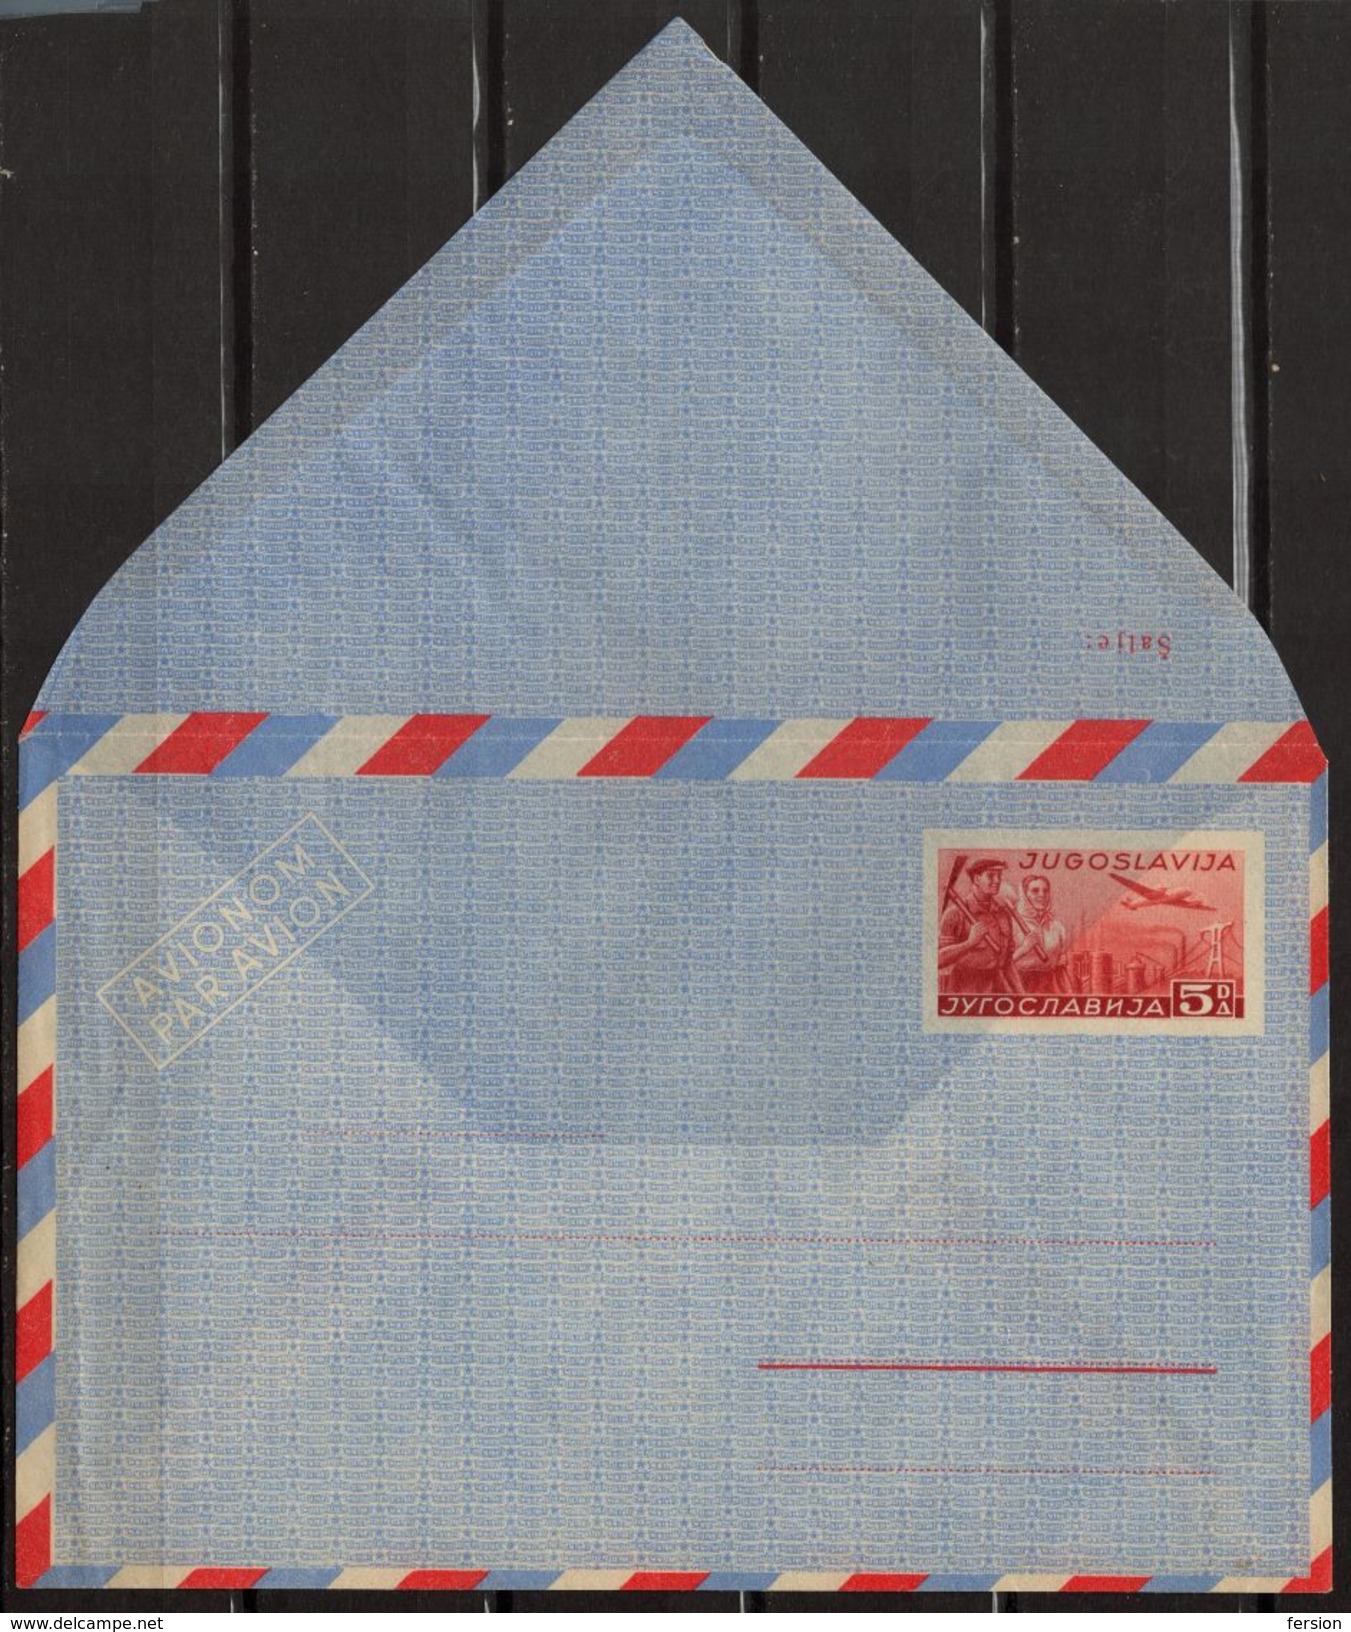 1949 Yugoslavia - Cover Letter - Stationery - AIR MAIL Aerogram PAR AVION - Not Used - Postal Stationery